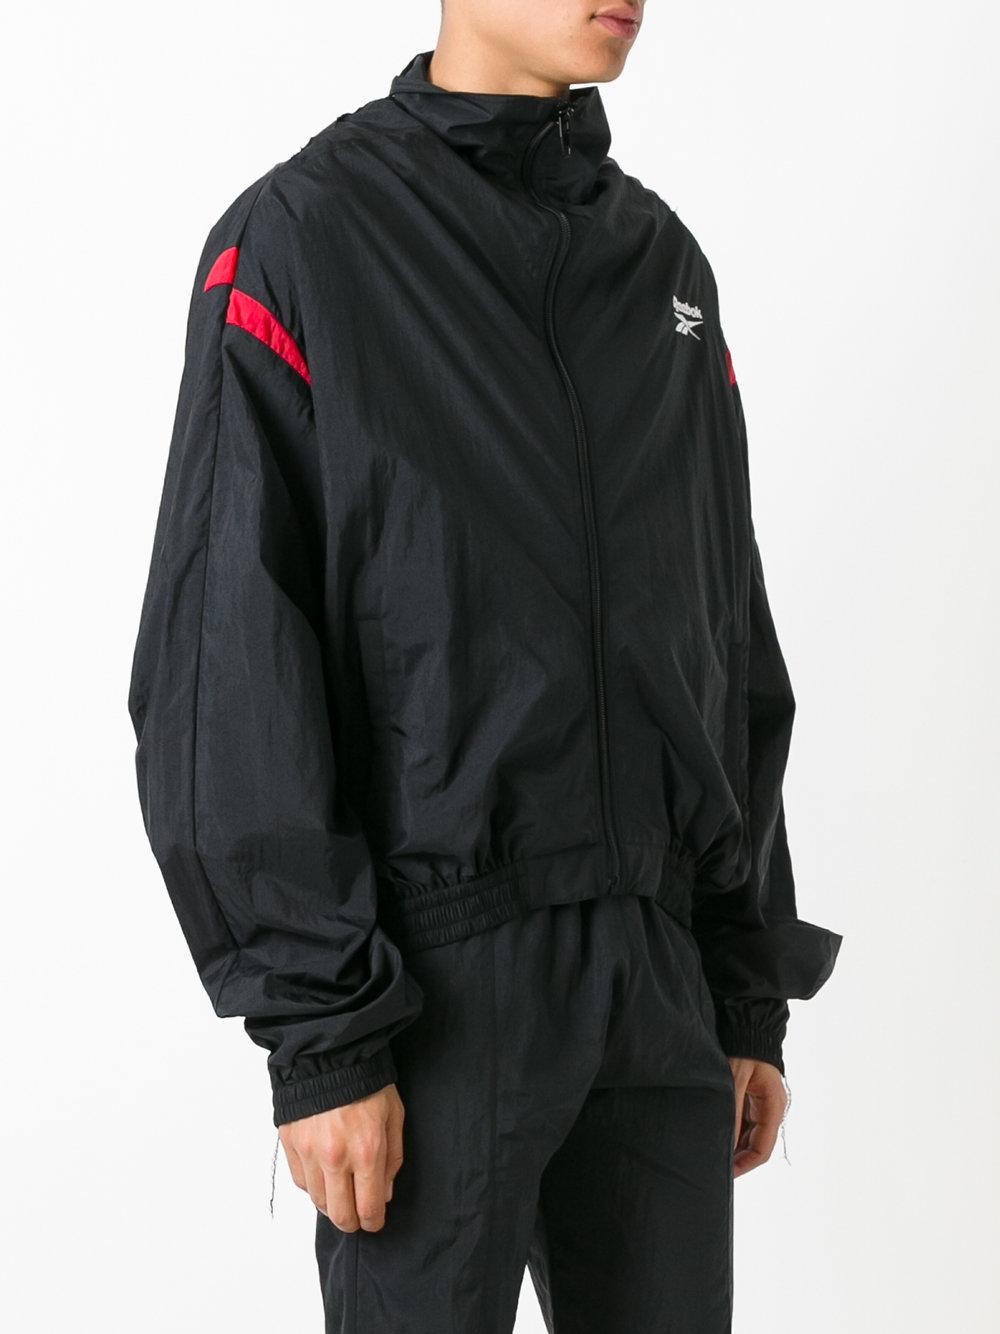 Vetements ' X Reebok' Reworked Track Jacket in Black for Men | Lyst